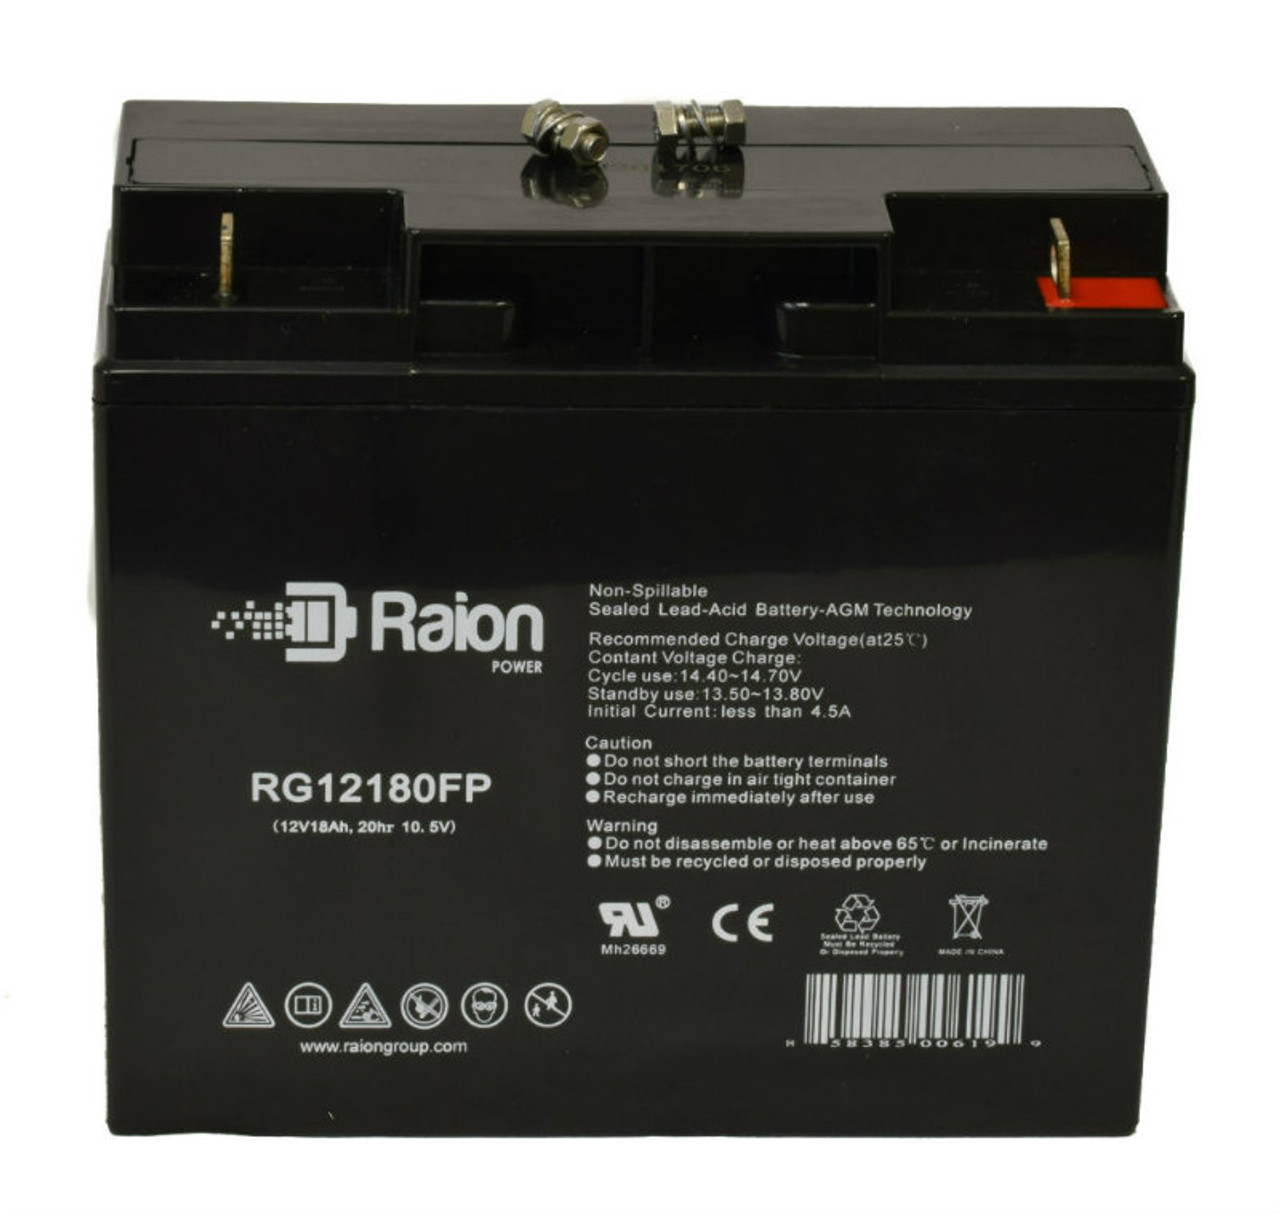 Raion Power RG12180FP 12V 18Ah Lead Acid Battery for Sureway SW-1022